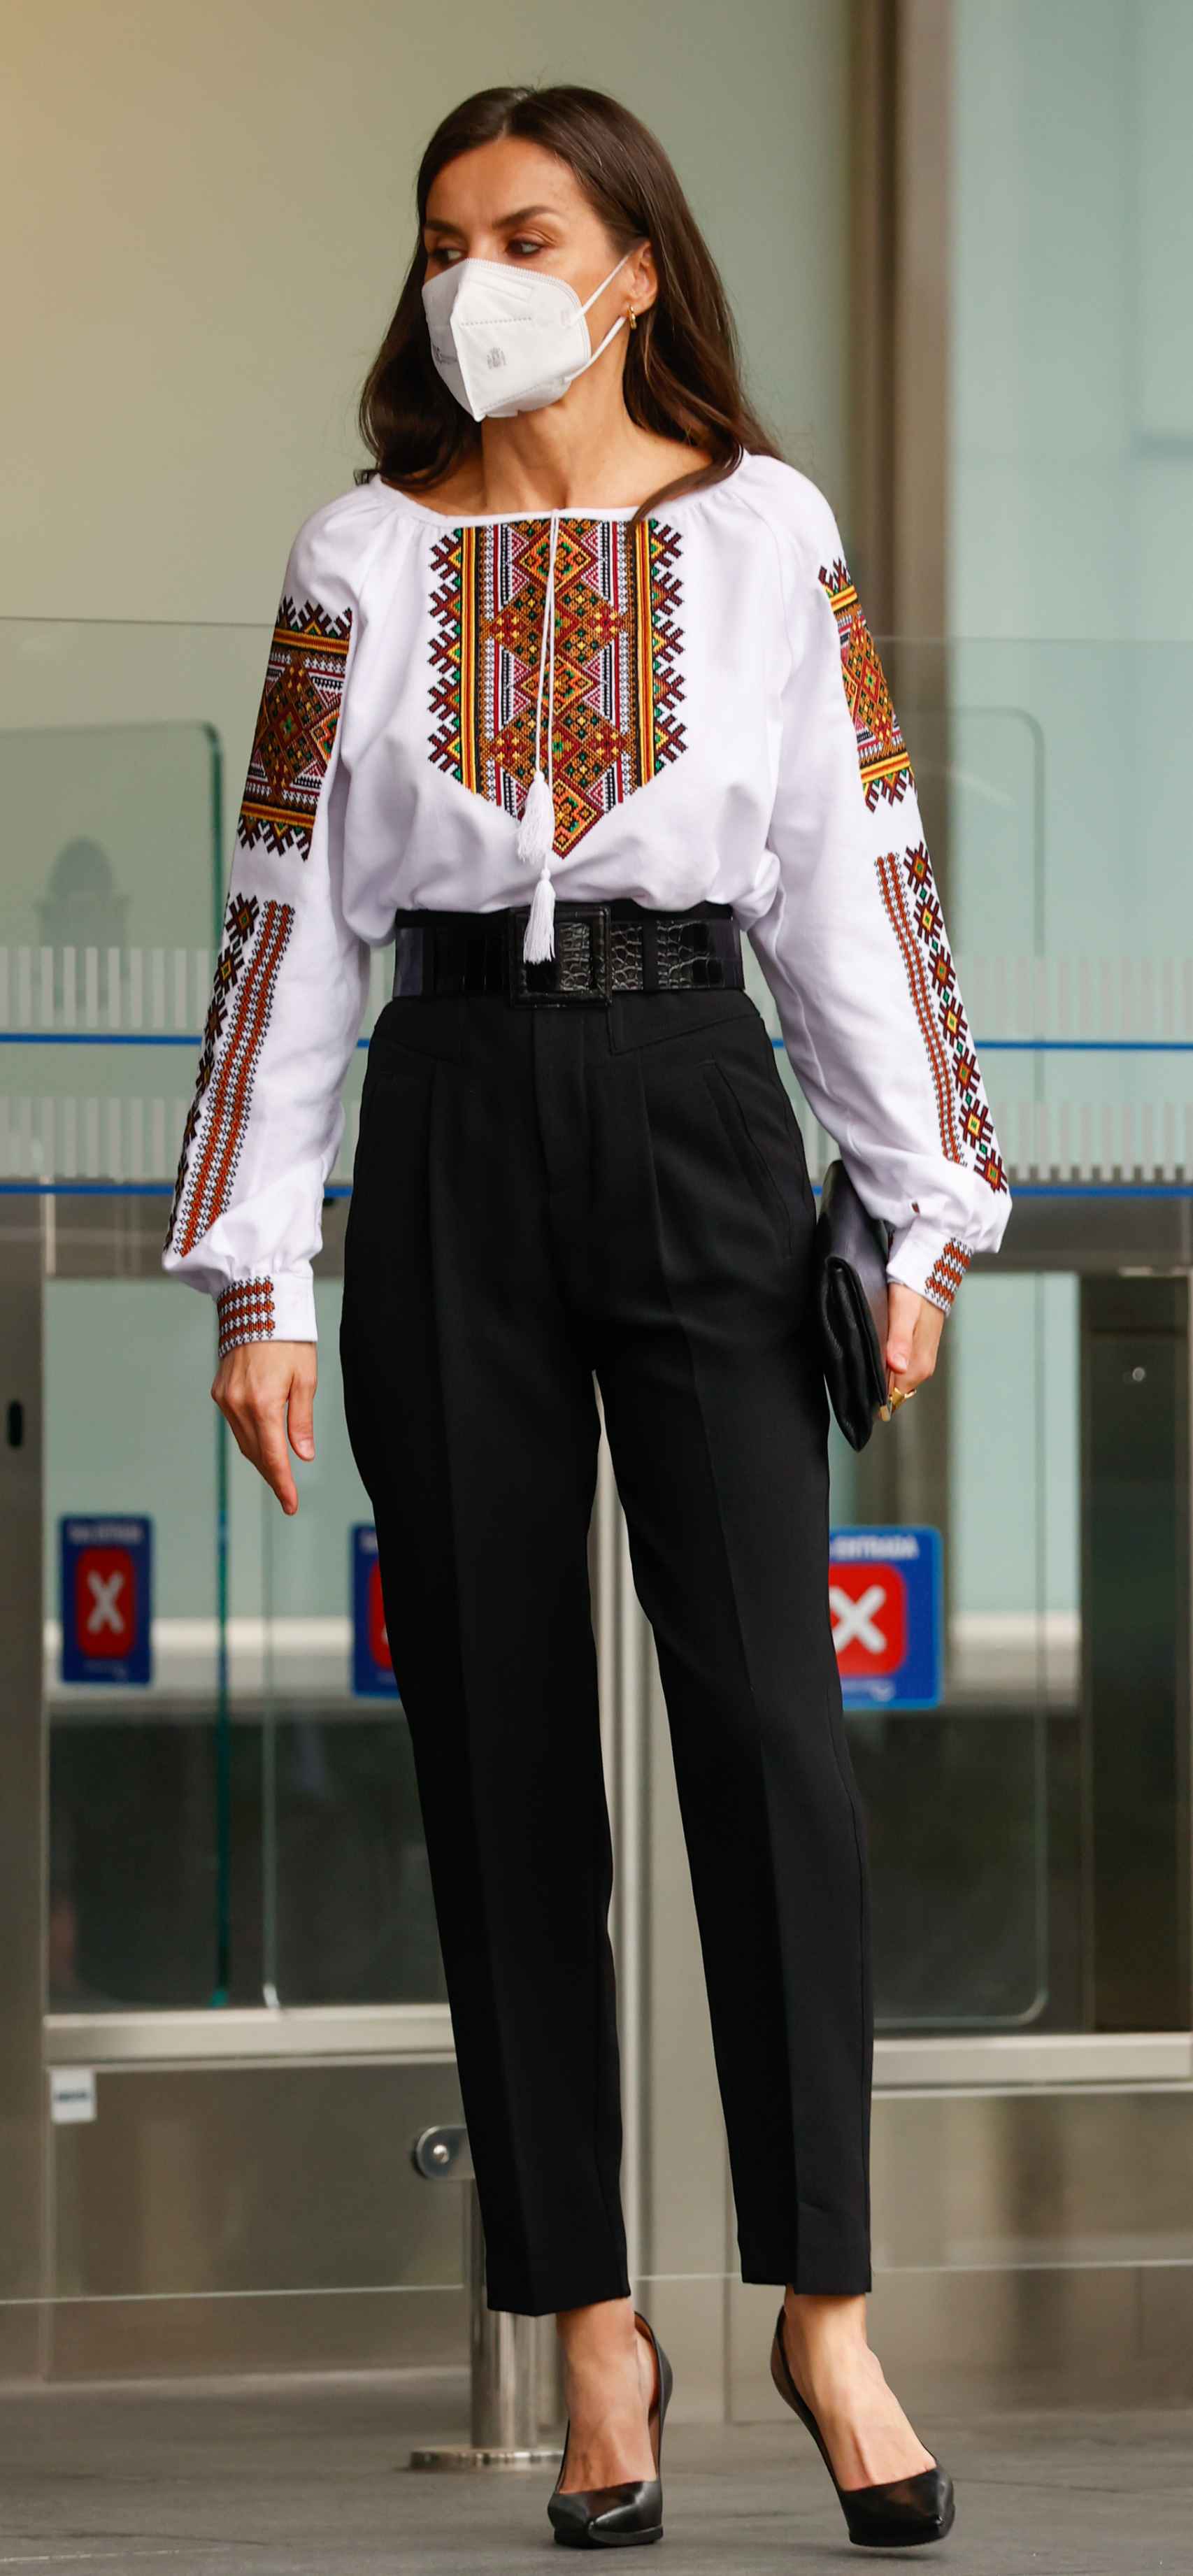 La reina Letizia con la blusa tradicional de Ucrania.